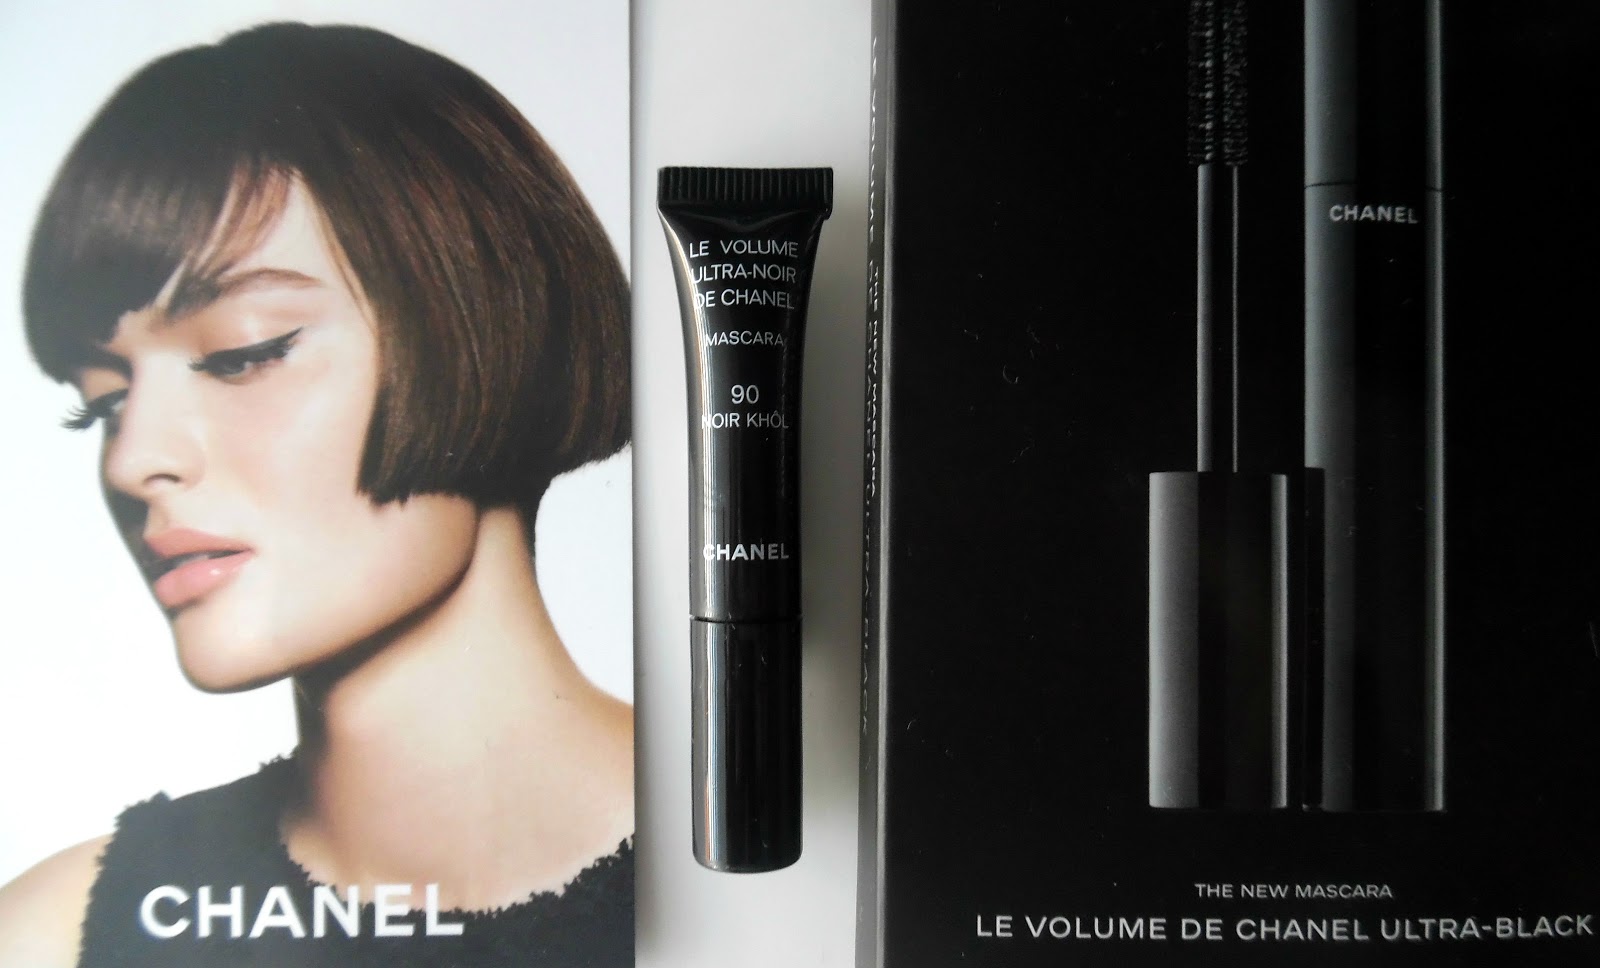  Chanel Le Volume De Chanel Mascara - 10 Noir Women